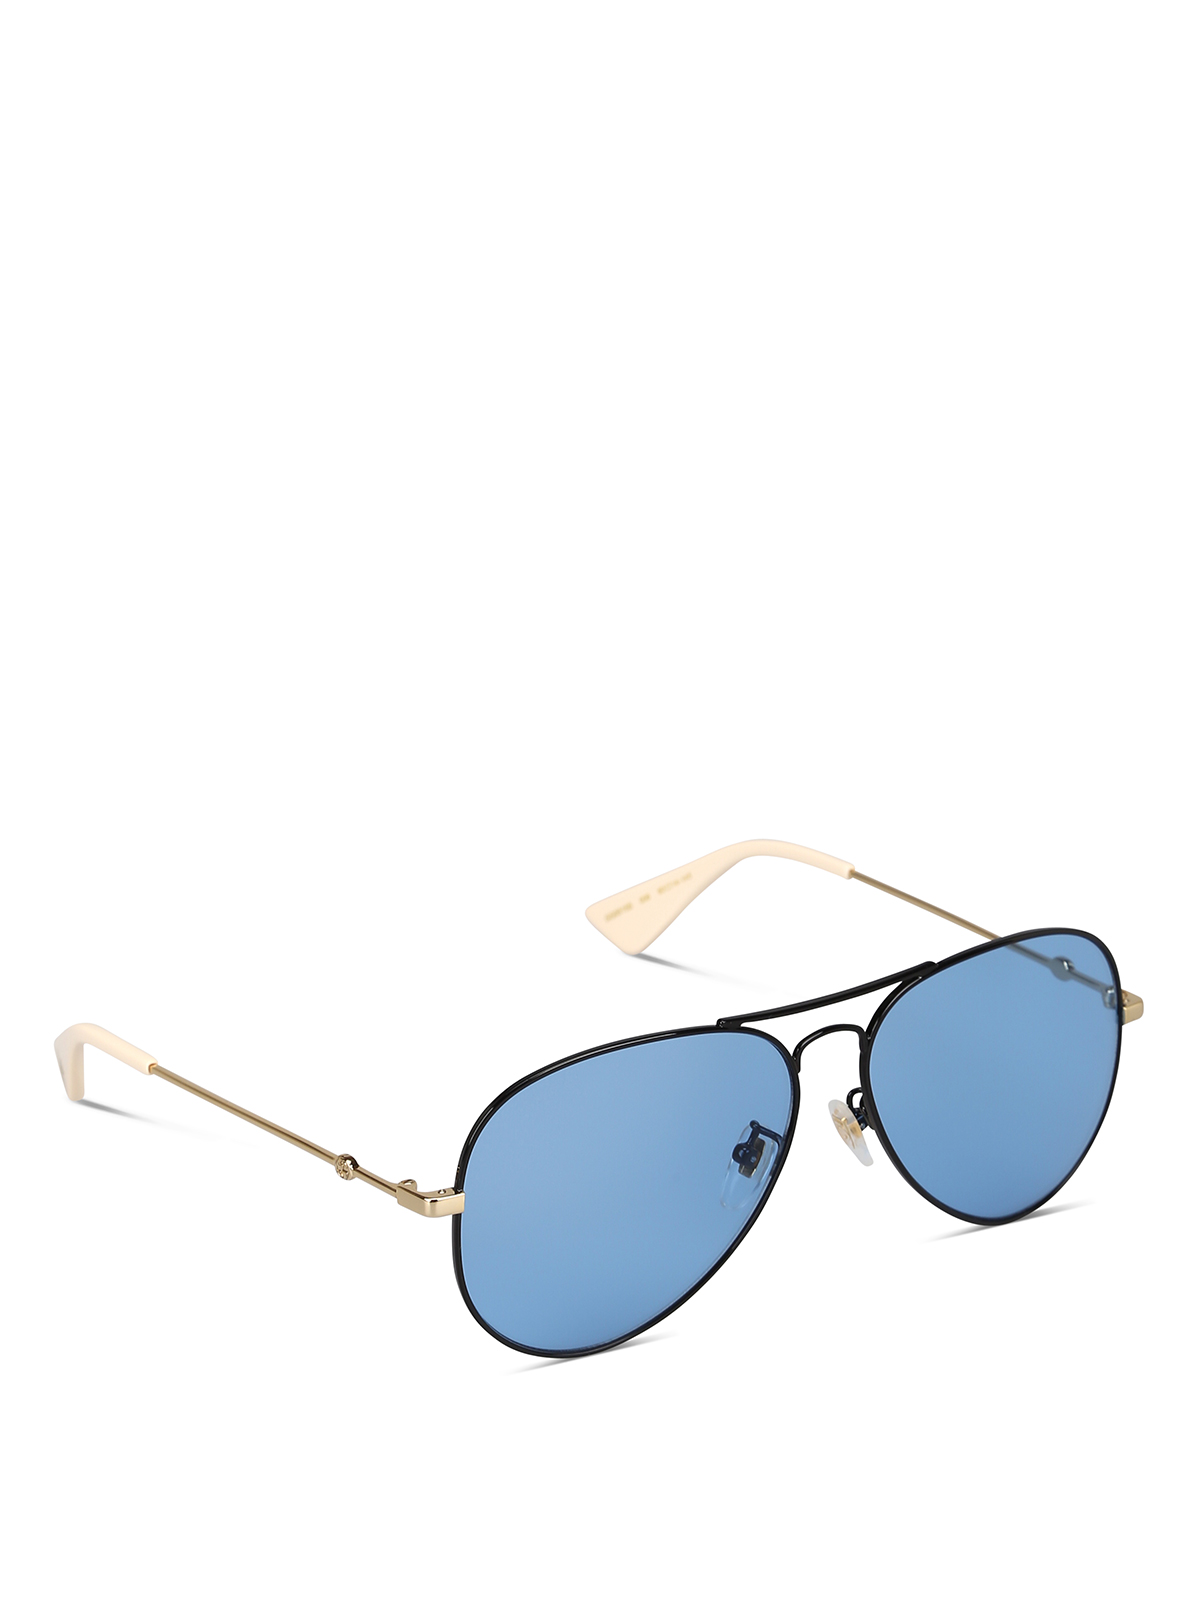 gucci blue aviator sunglasses